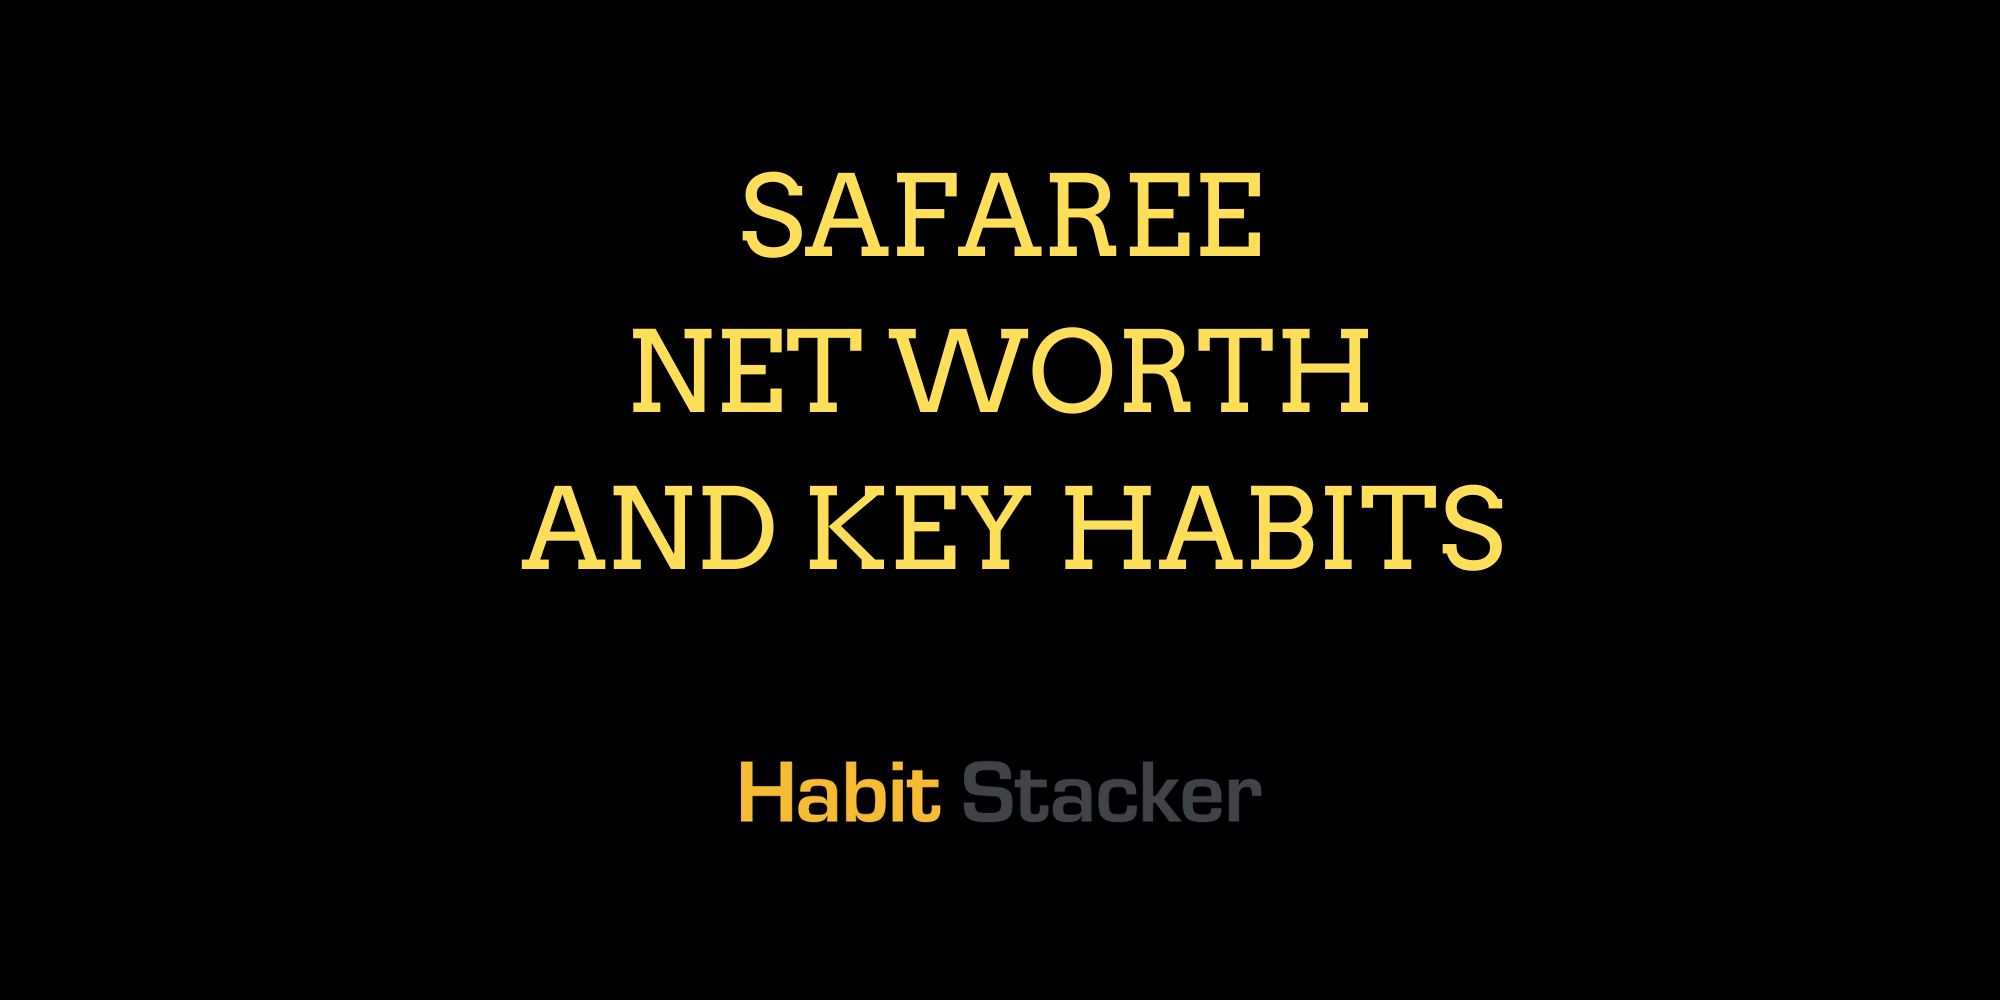 Safaree Net Worth and Key Habits